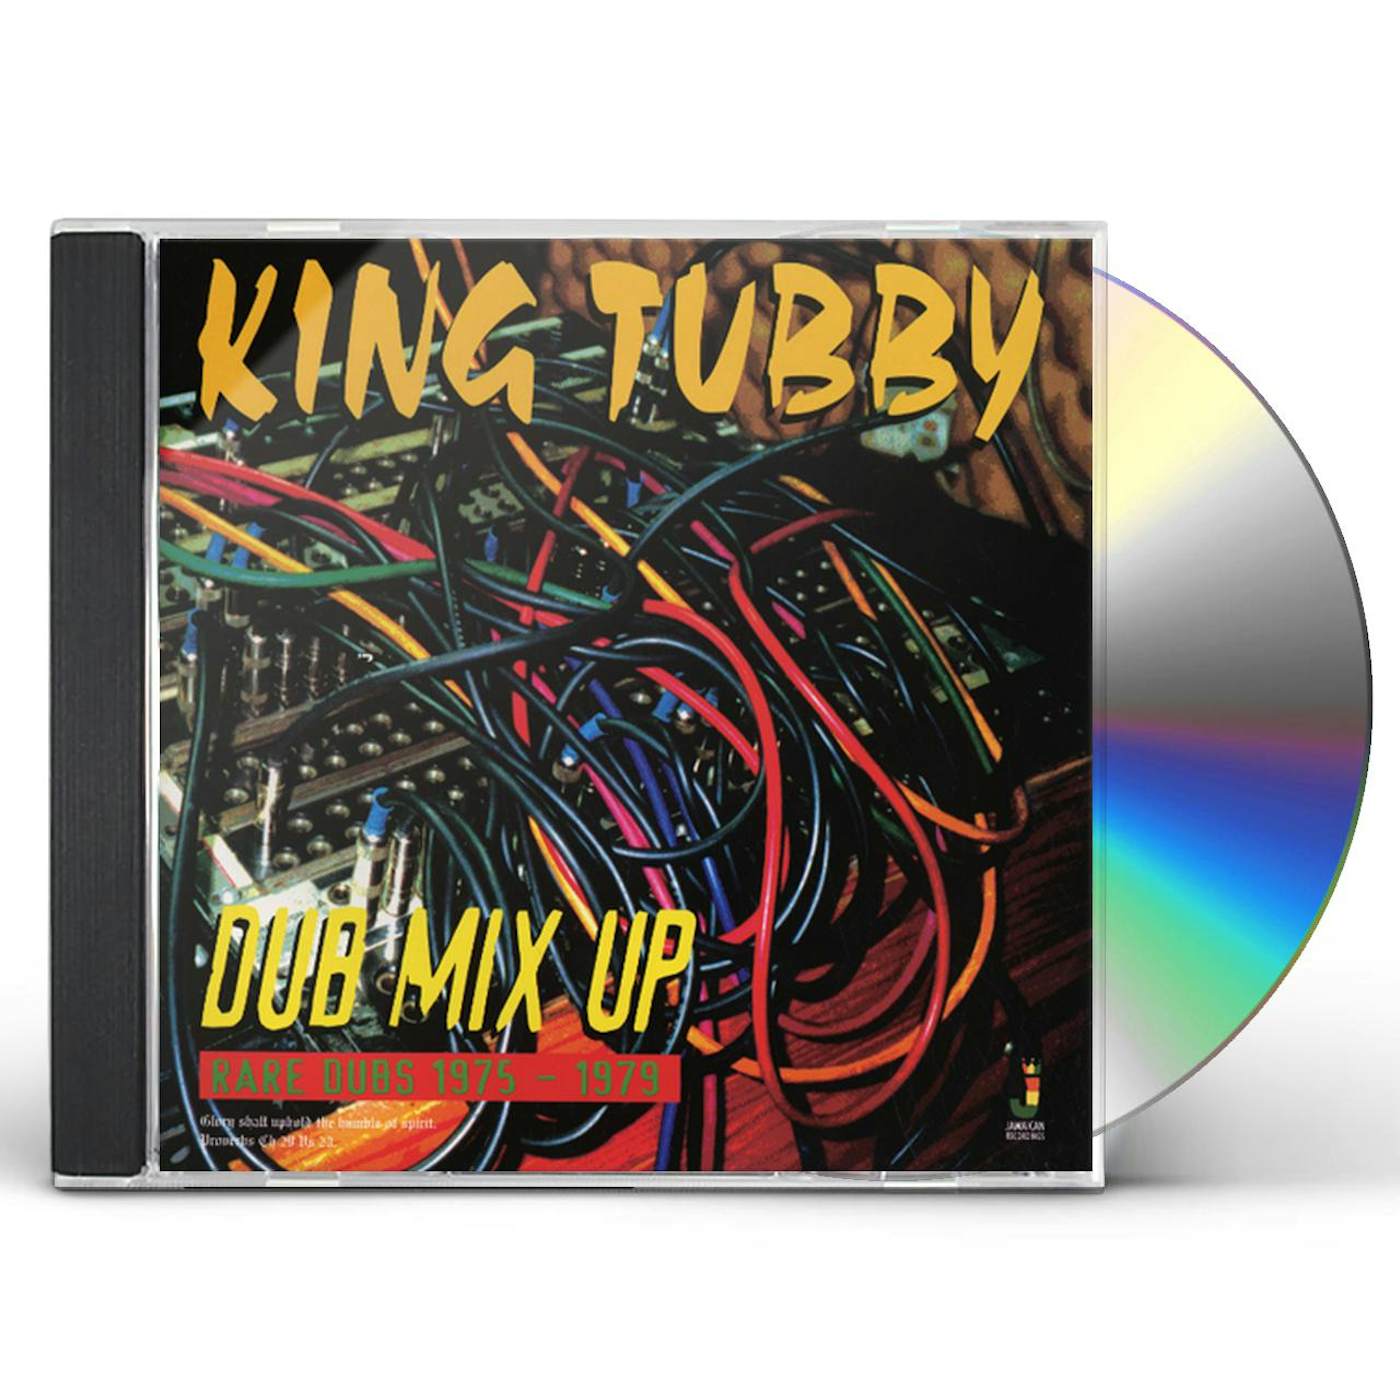 King Tubby DUB MIX UP-RARE DUBS 1975-79 CD